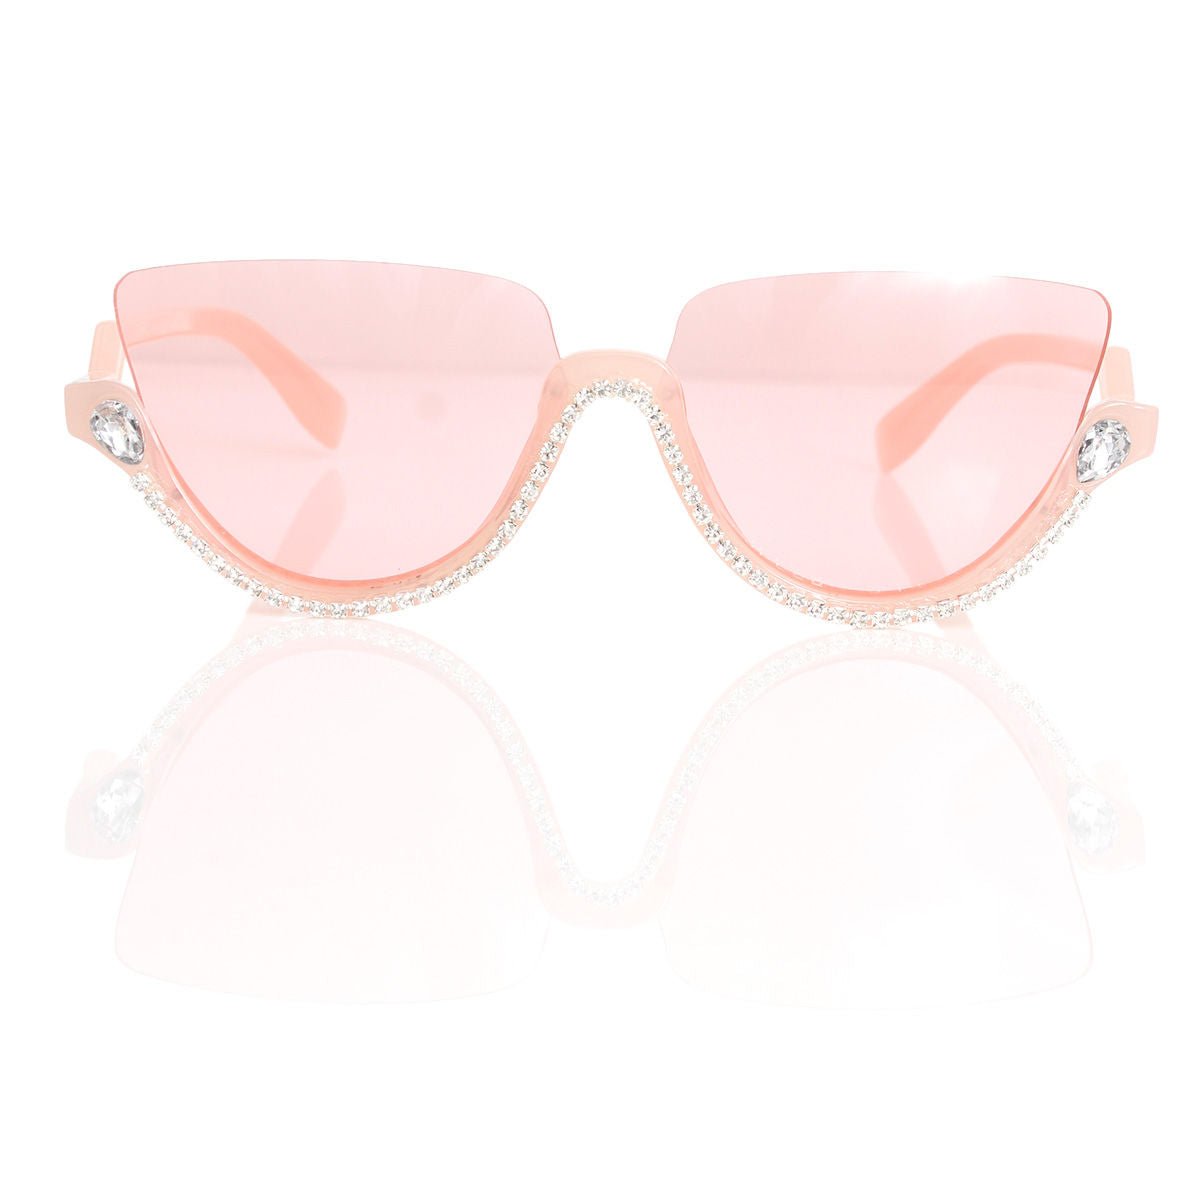 Sunglasses Half Frame Pink Eyewear for Women - Bae Apparel